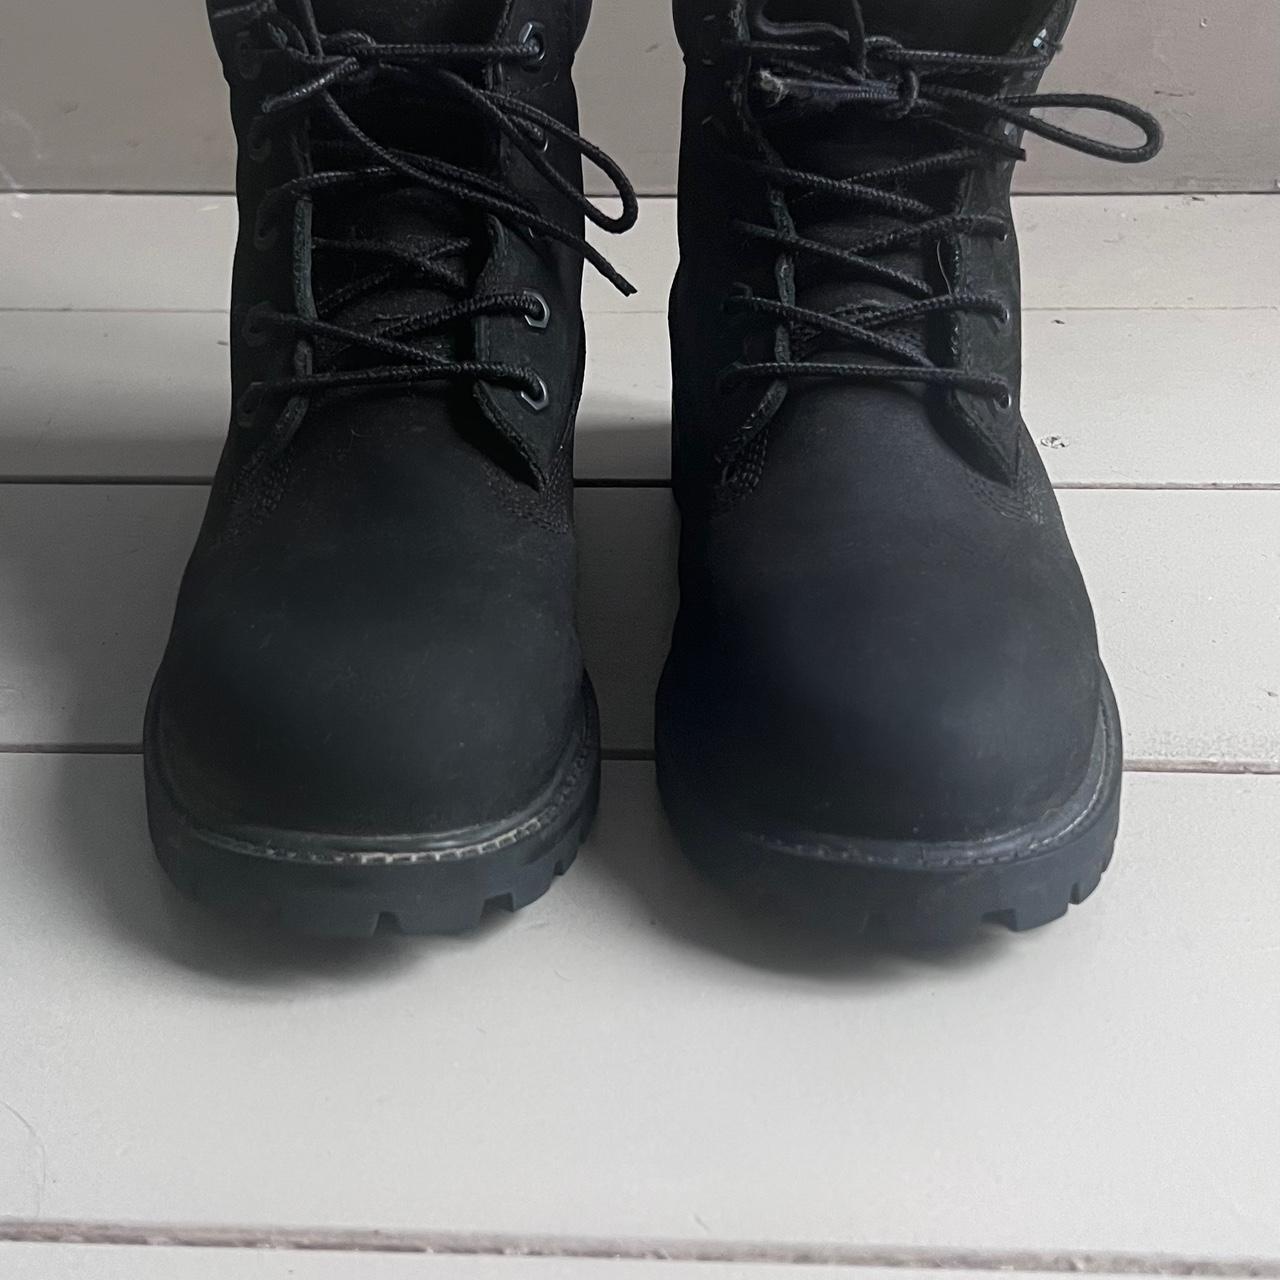 Black Timberland Boots - Depop